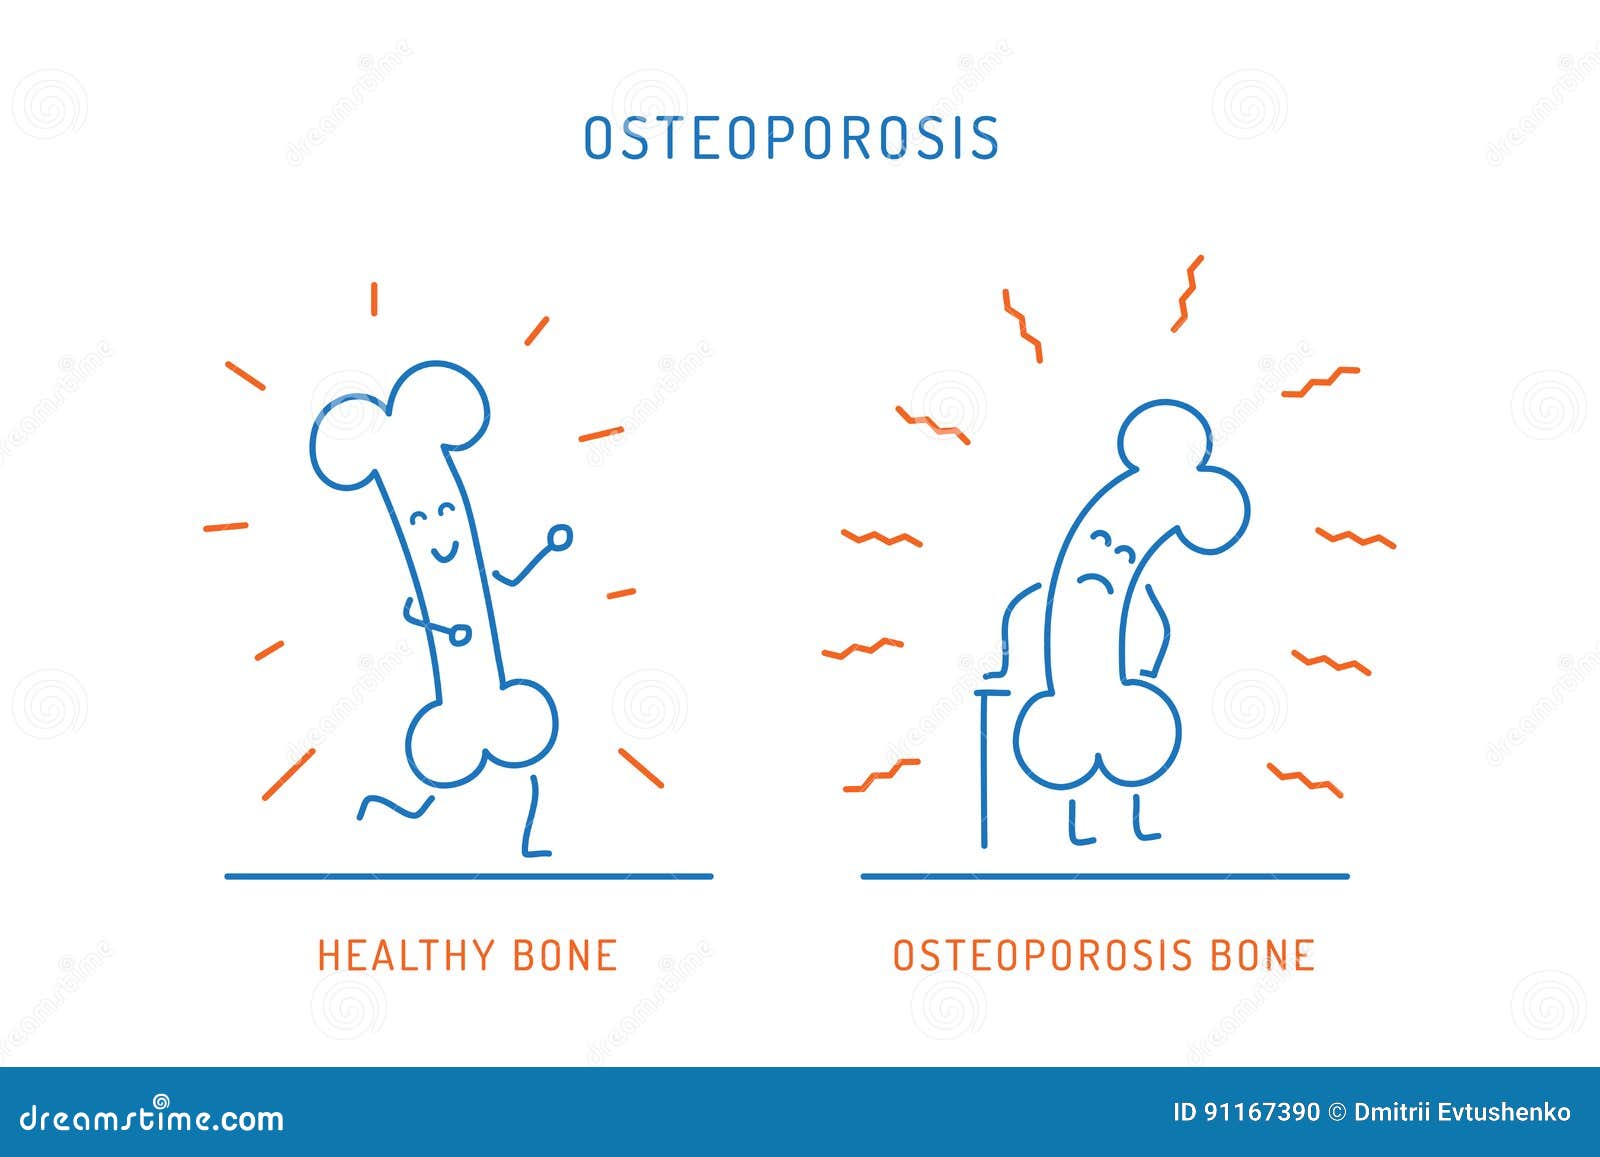 Osteoporosis cartoon bone stock vector. Illustration of condition - 91167390